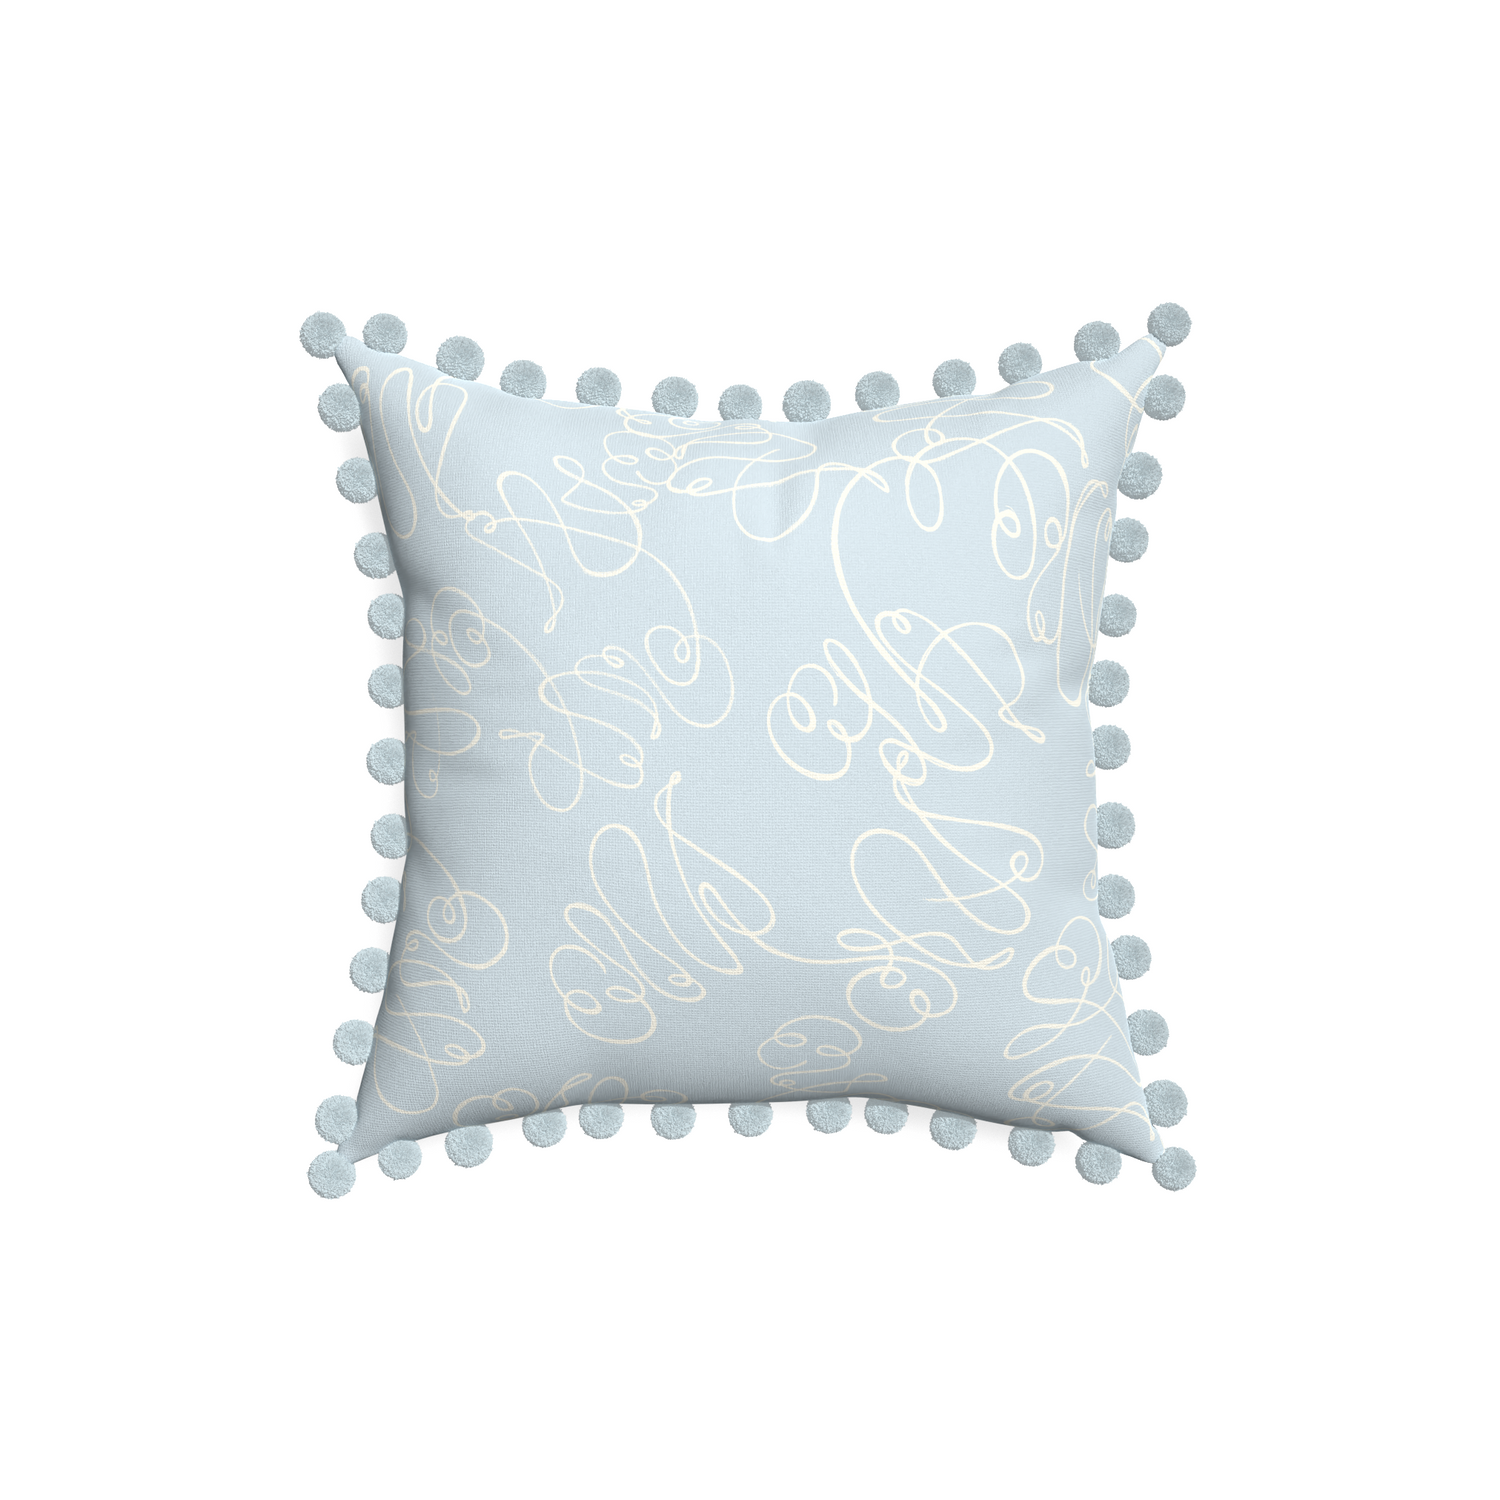 18-square mirabella custom pillow with powder pom pom on white background